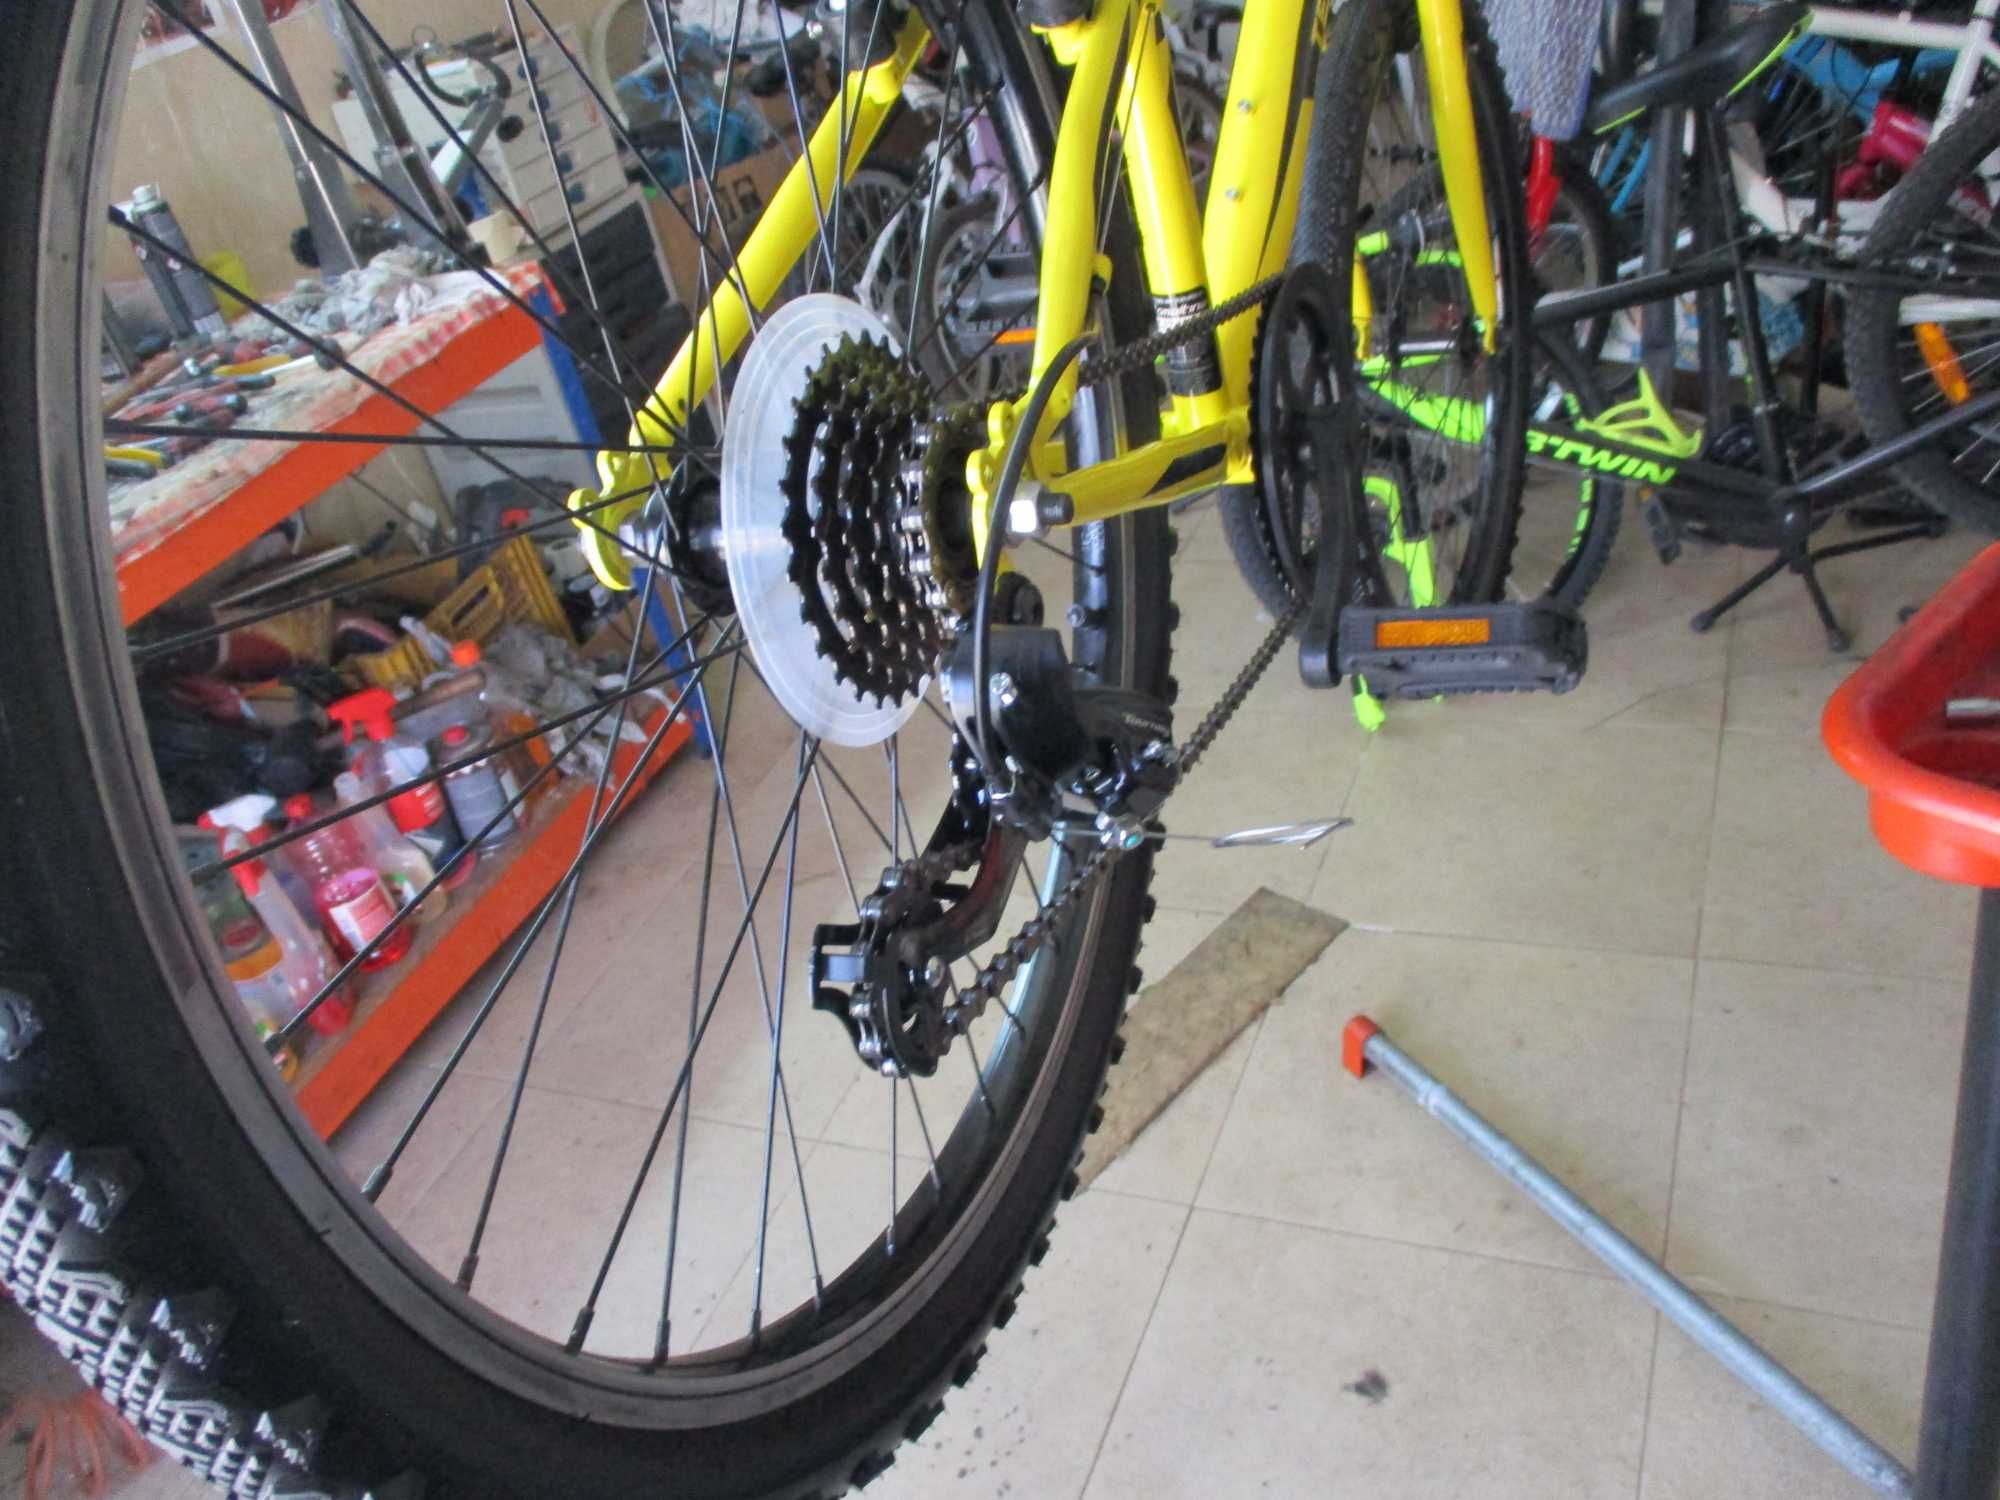 Bicicleta TEAM amarela roda 24, c/ 6 speeds